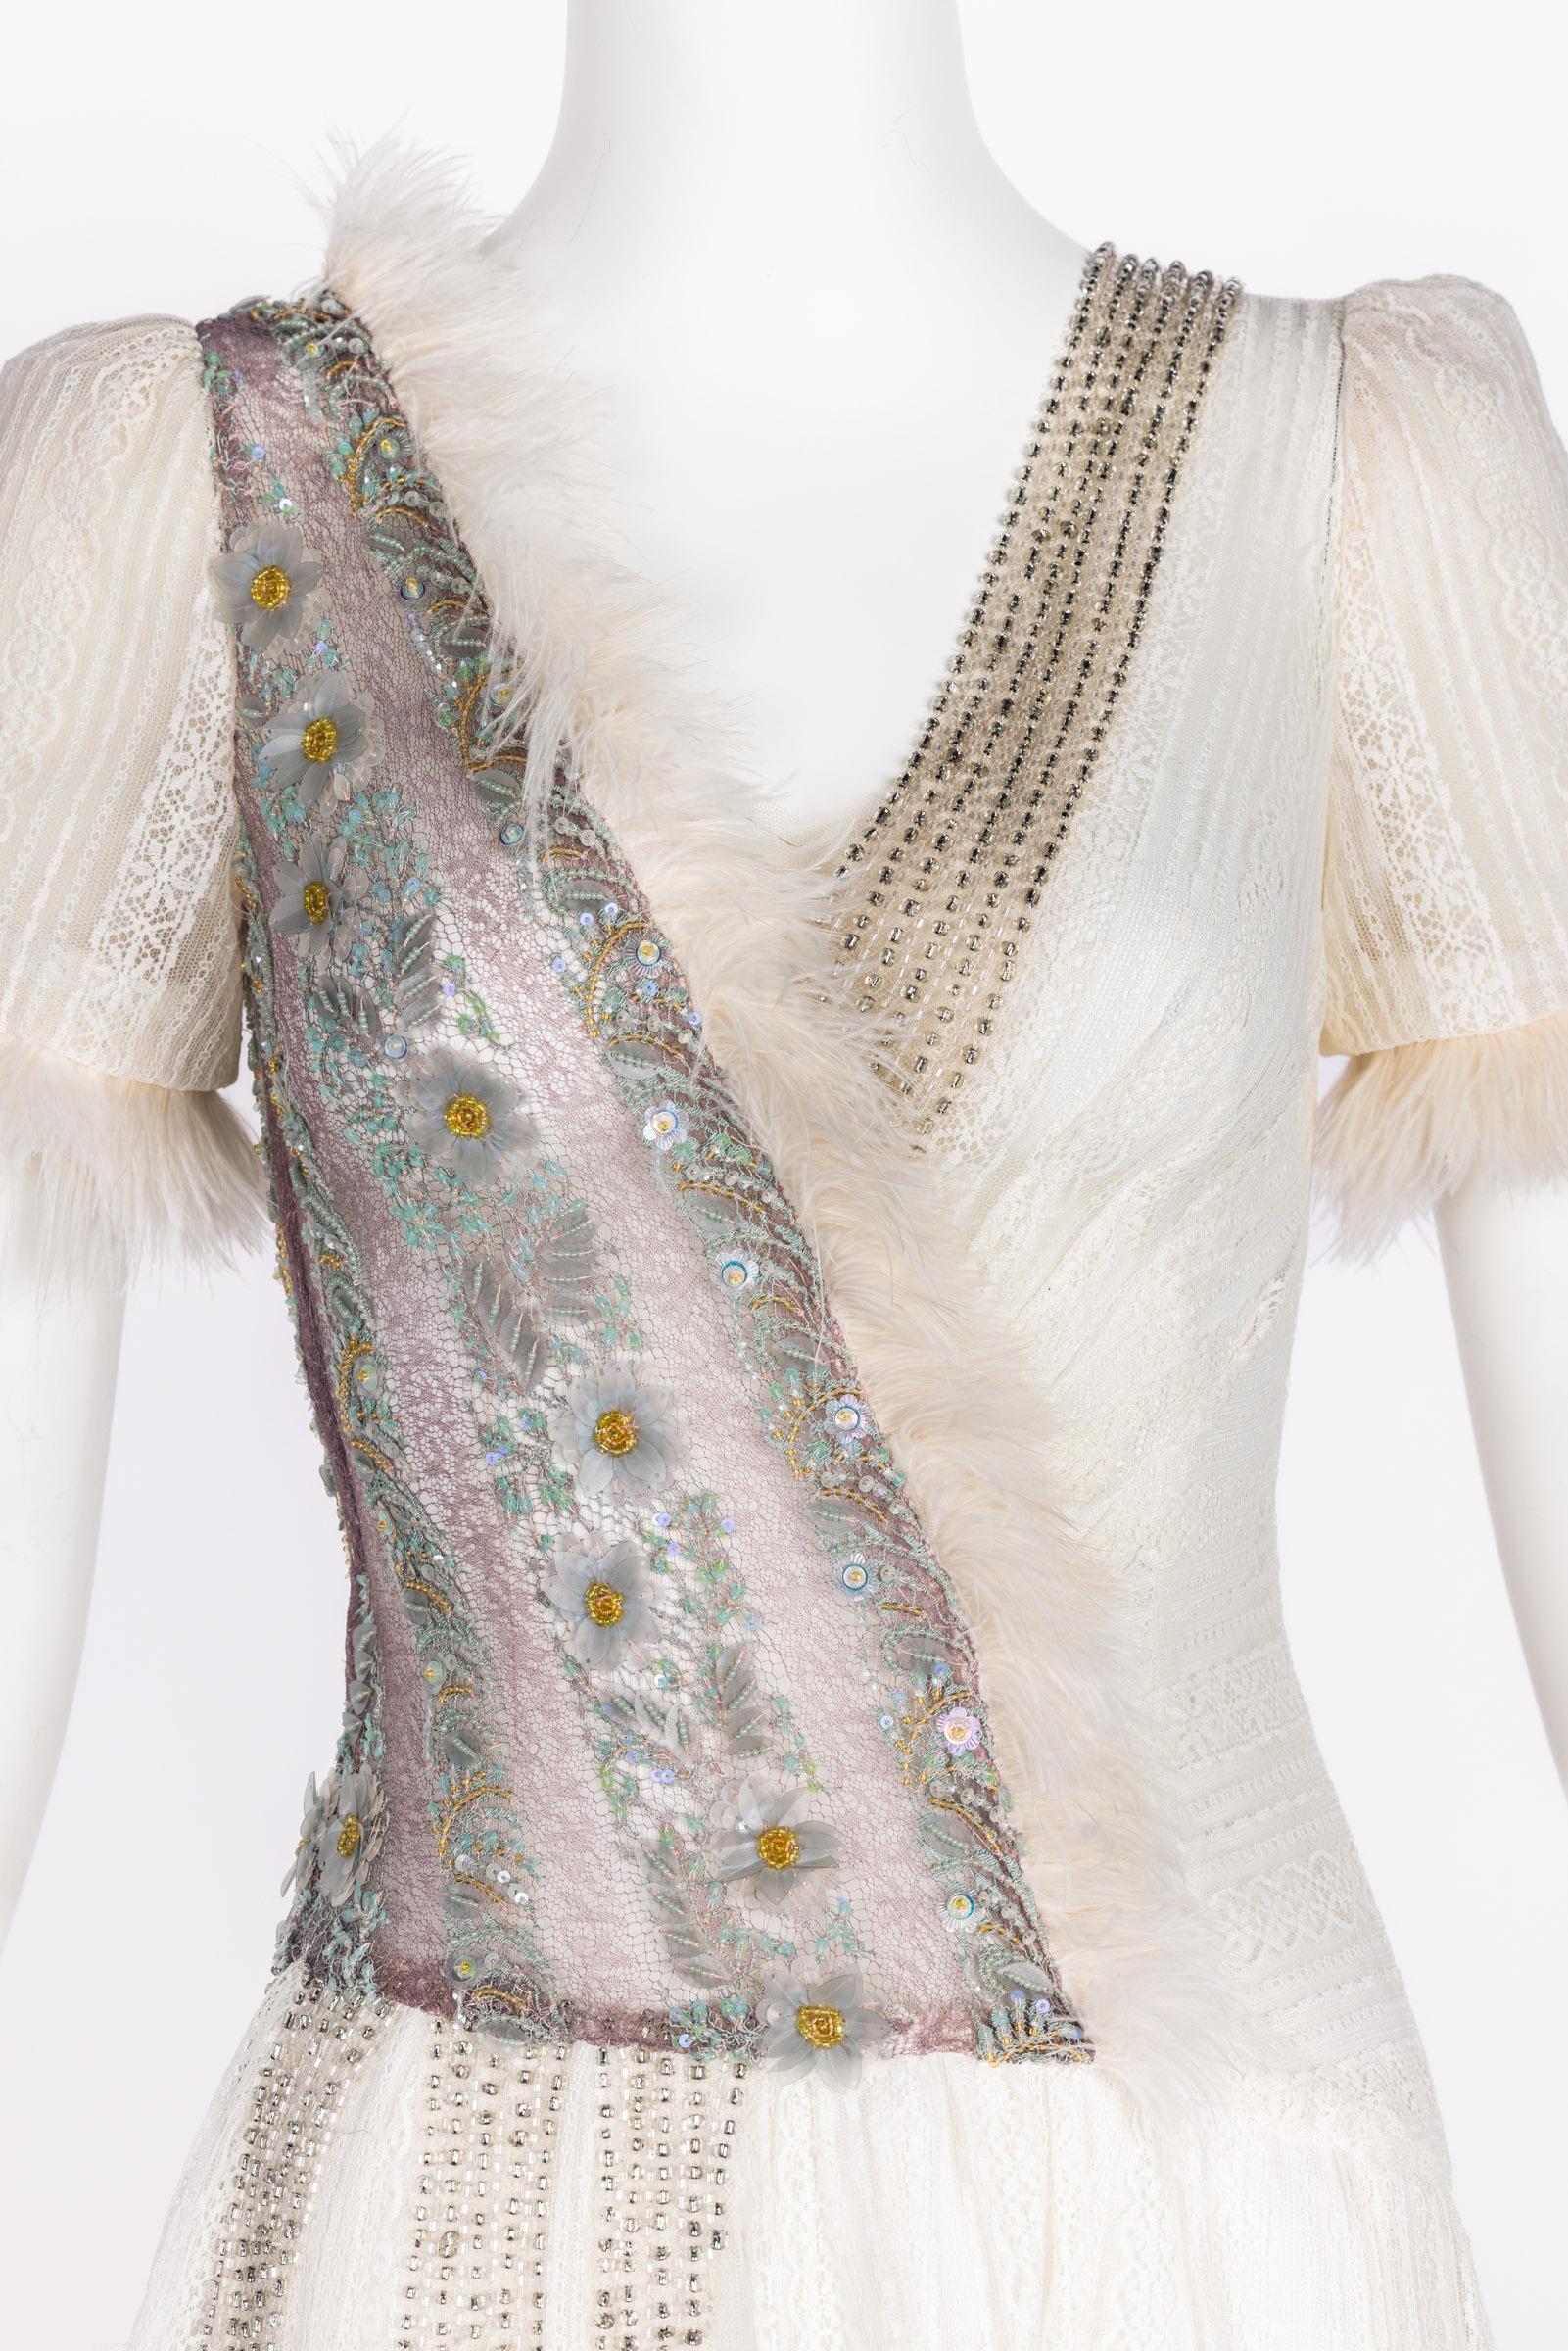 Rodarte Fall 2015 Lace Crystal Embellished Feather Trim Mini Dress For Sale 2